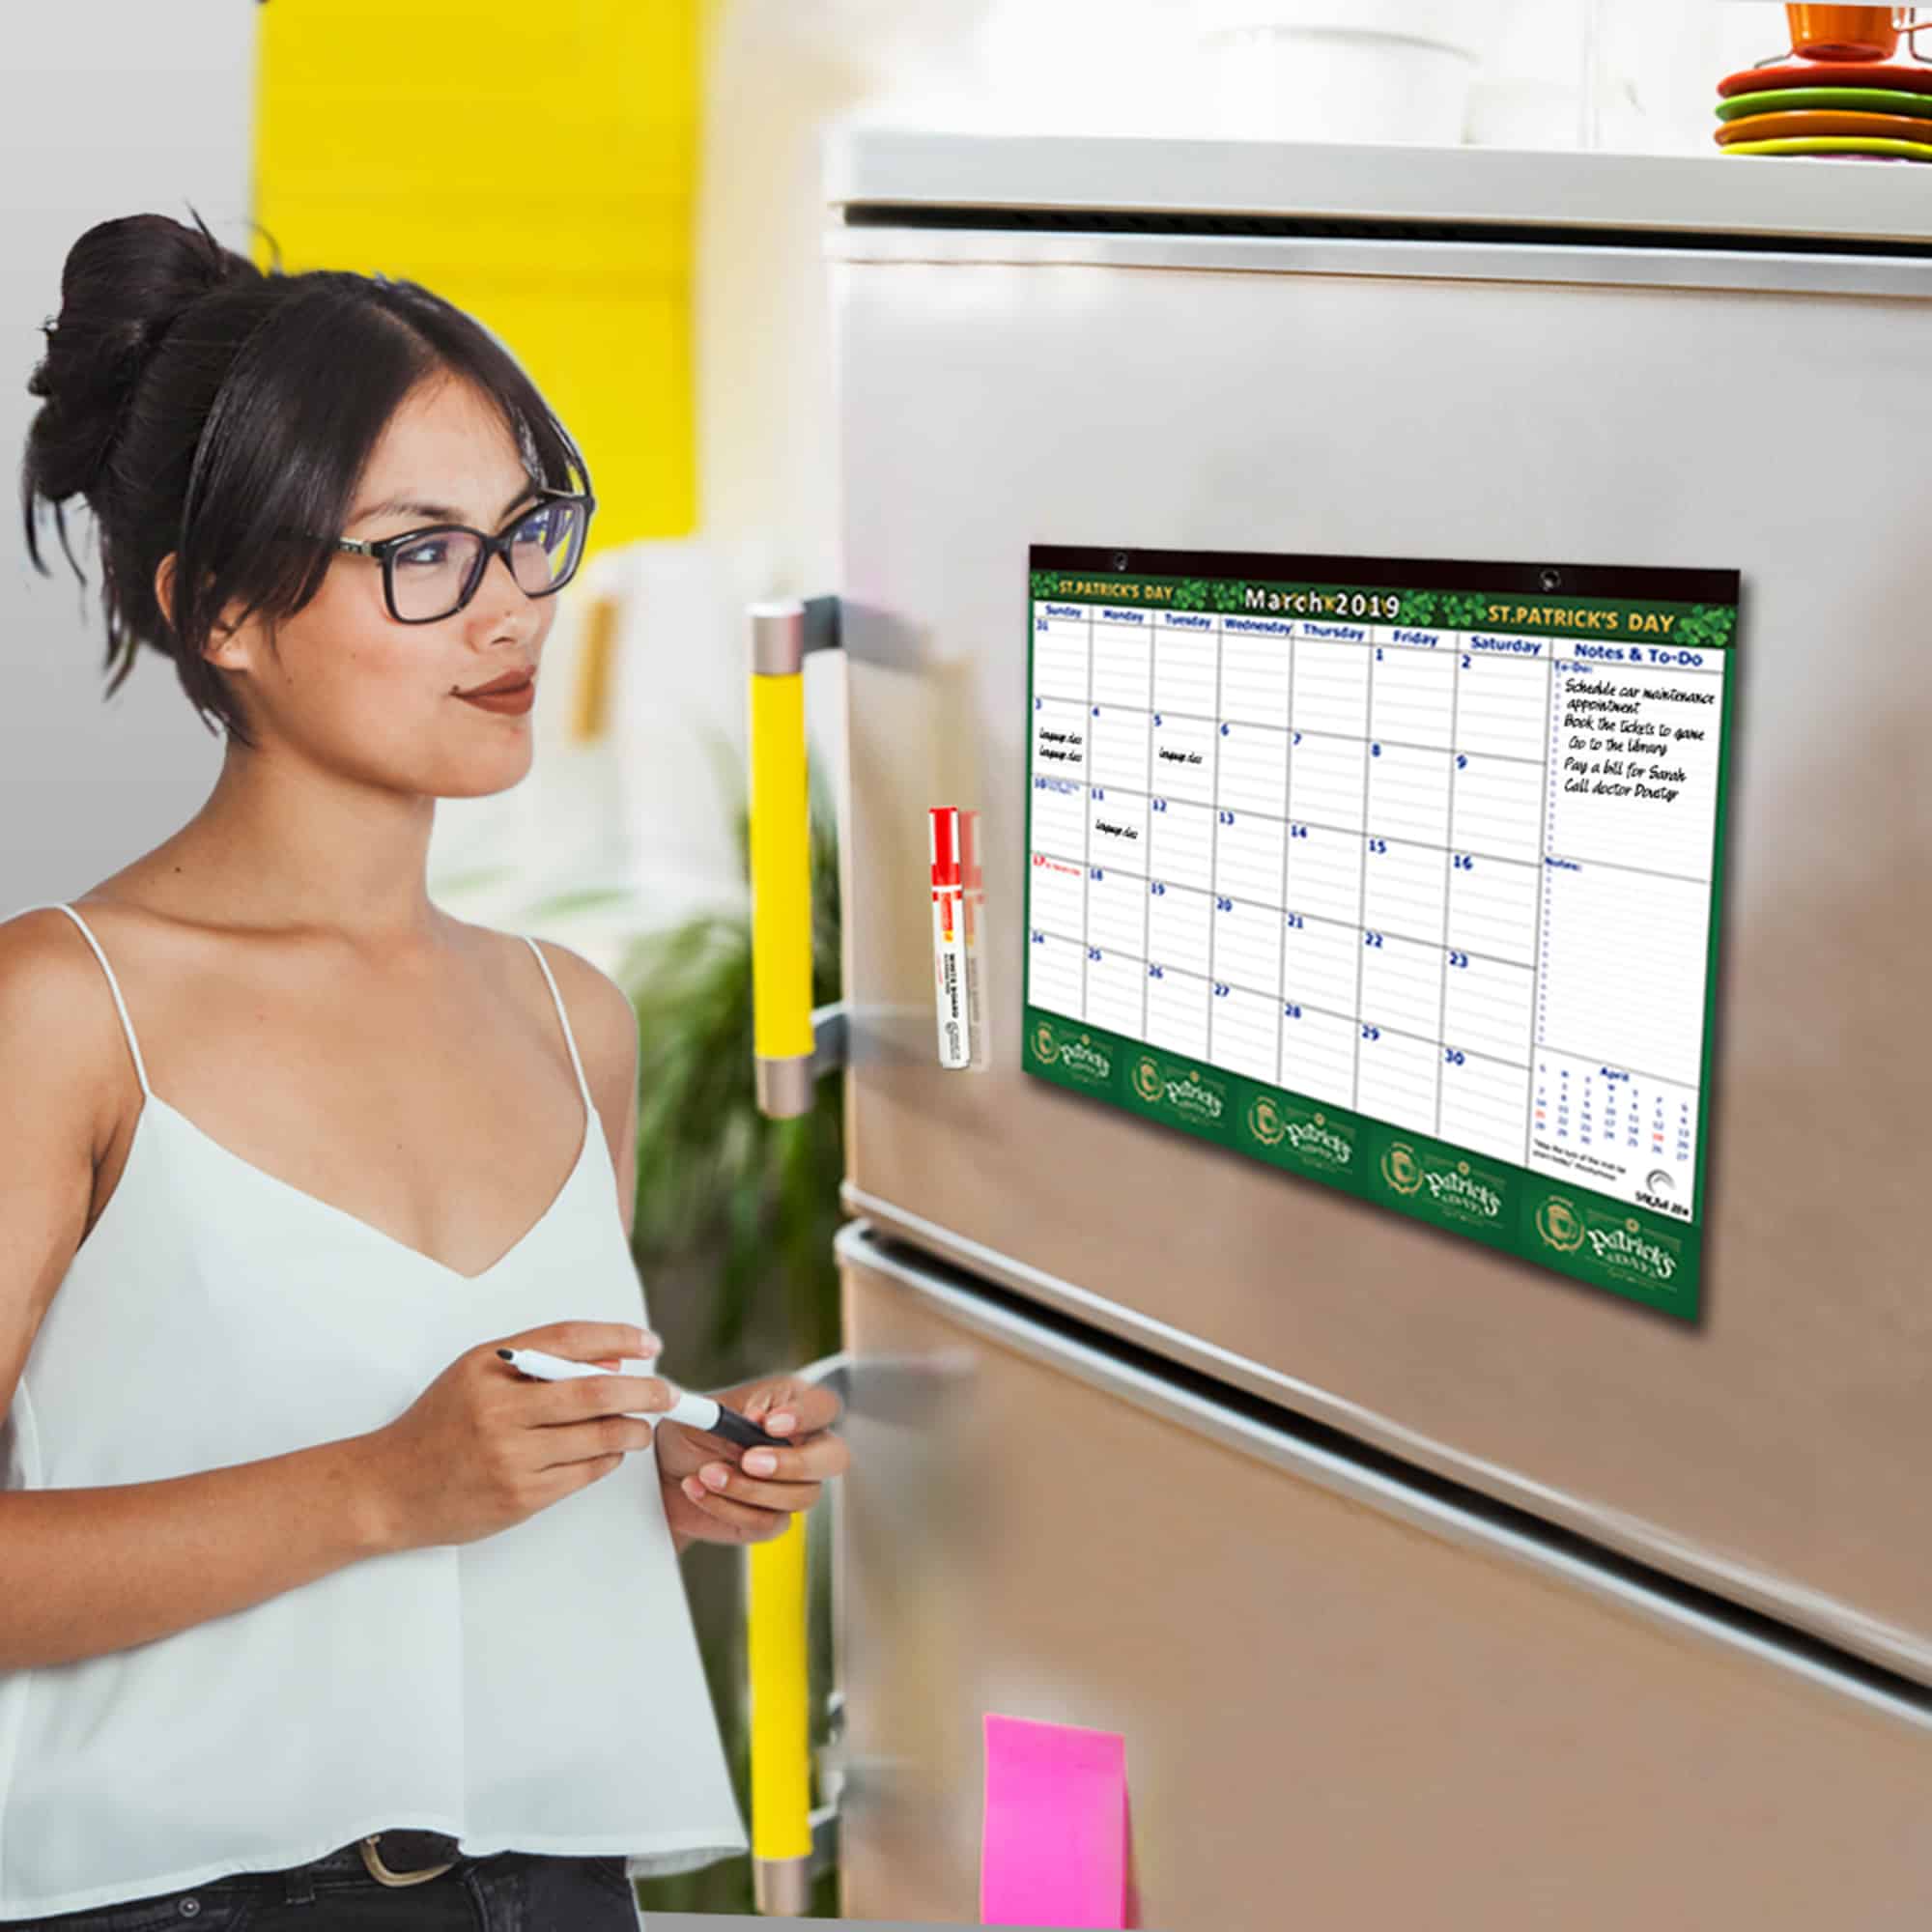 fridge-calendars-how-to-organize-and-plan-using-your-fridge-calendar-strivezen